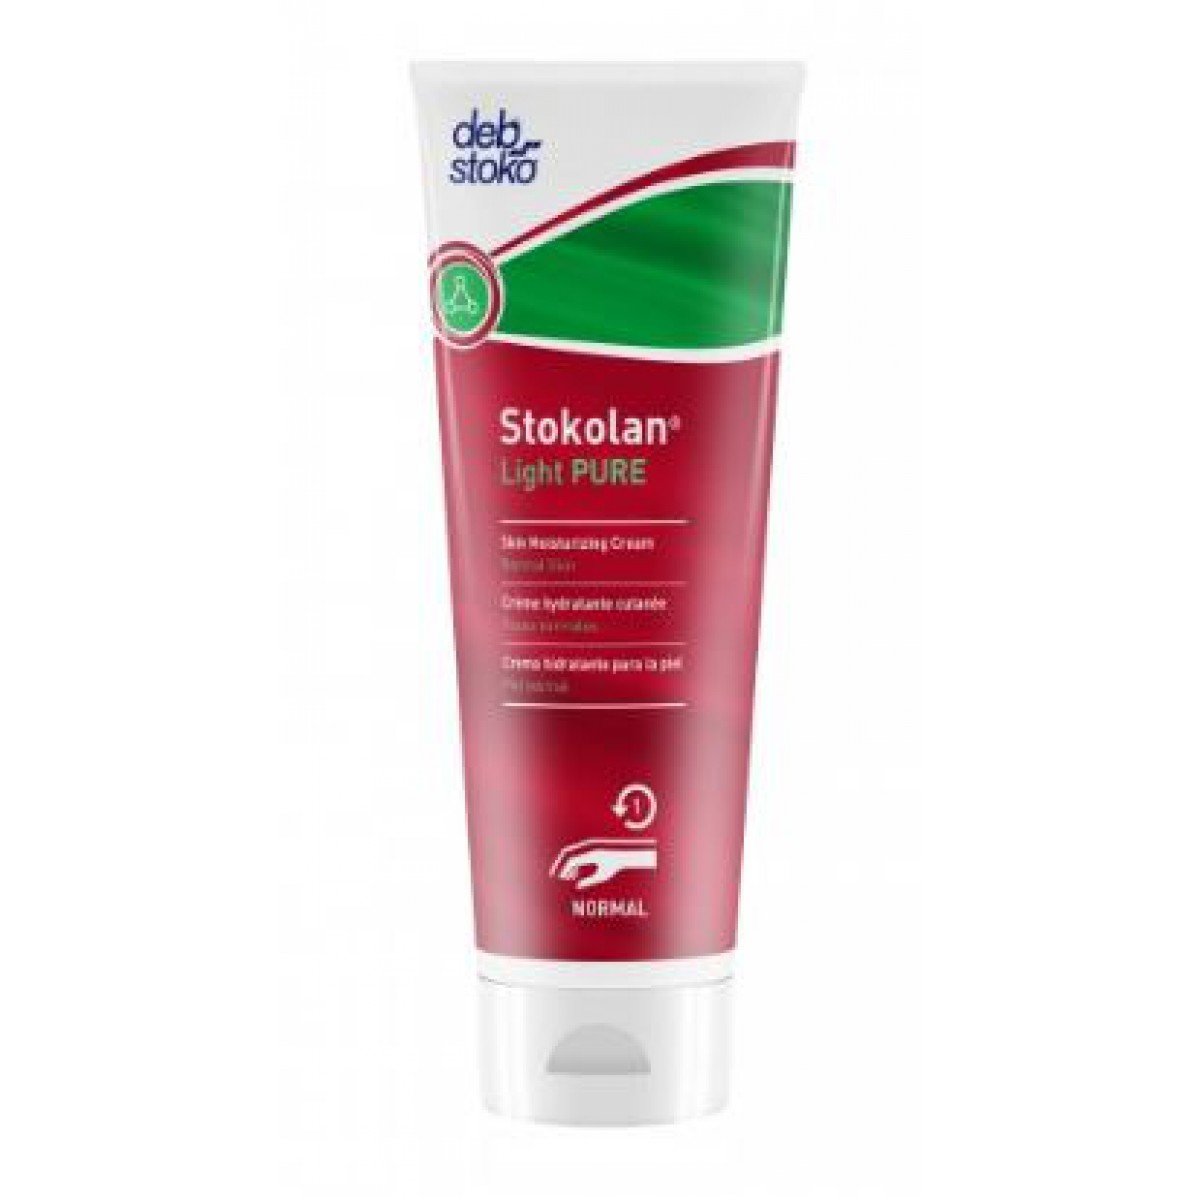 Stokolan® Light PURE Skin Conditioning Cream